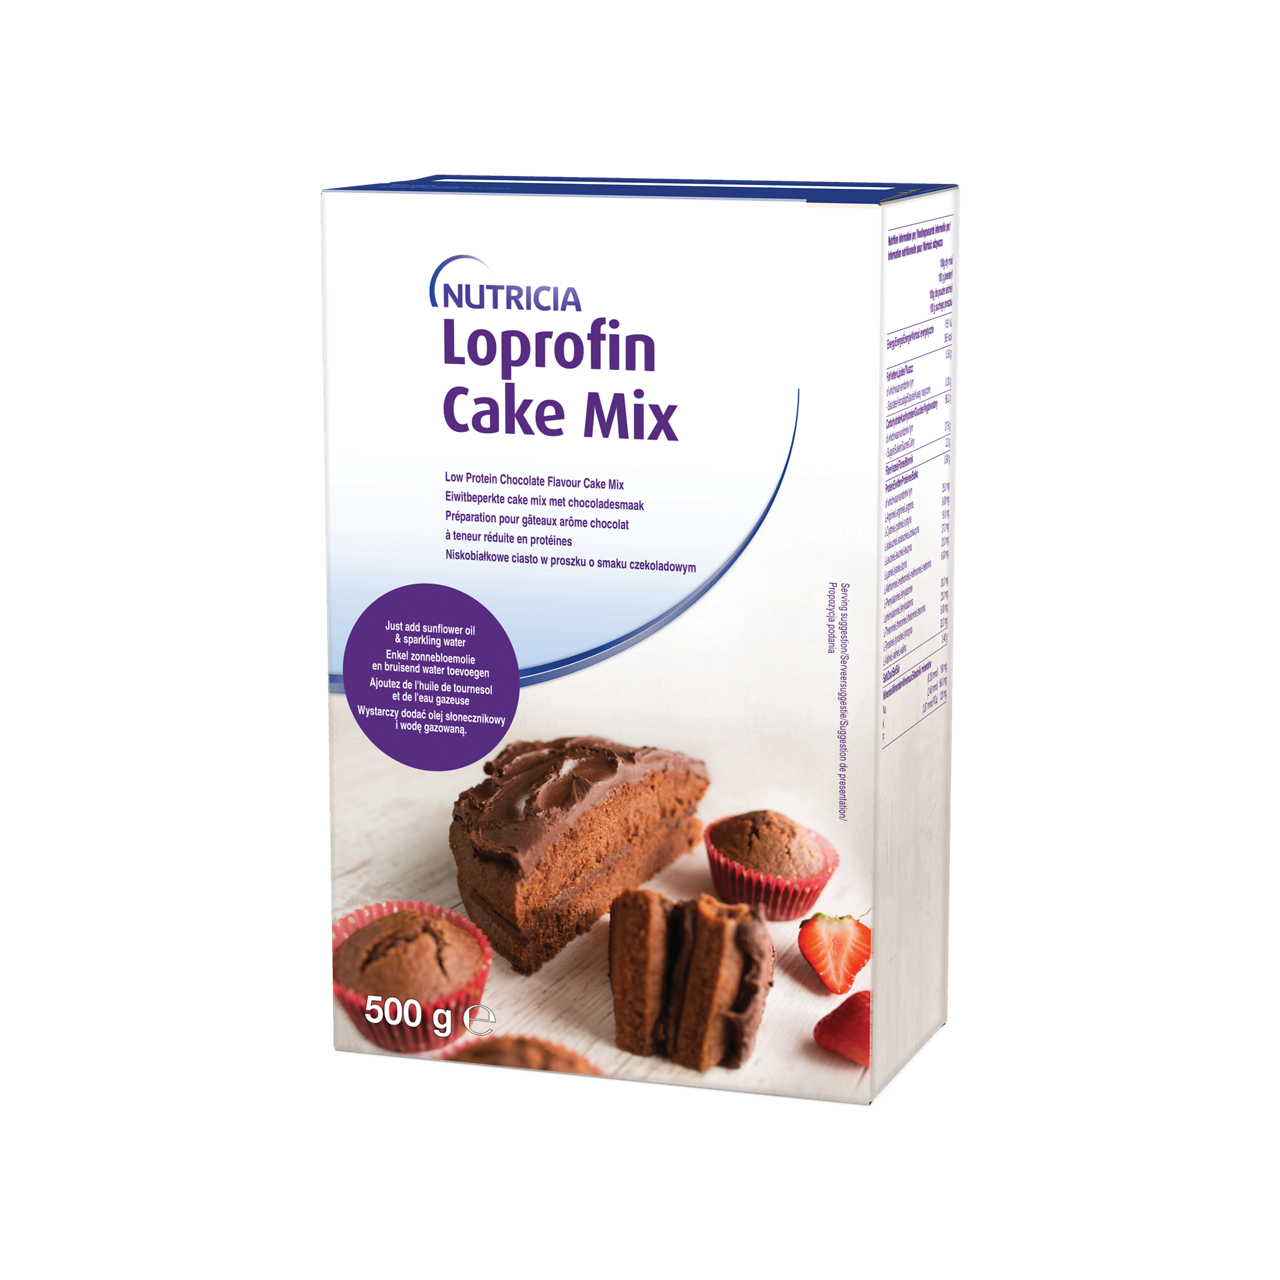 Loprofin Chocolate Cake Mix